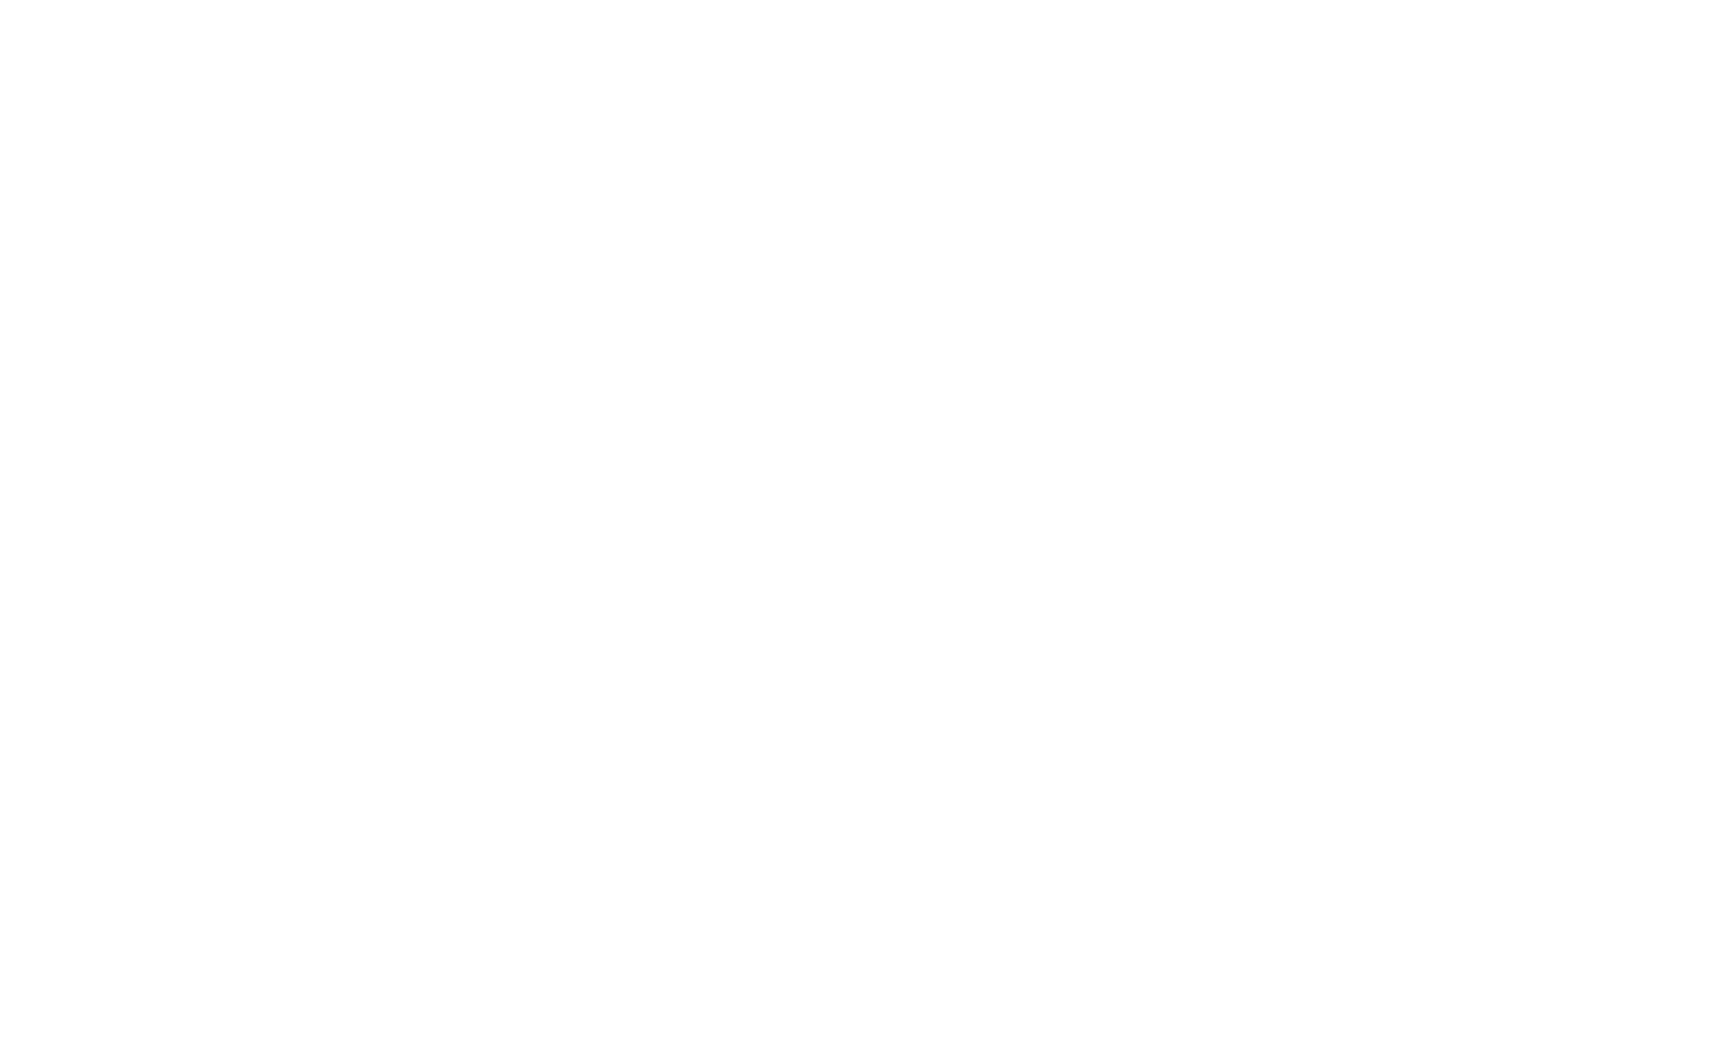 ASTON MARTIN HỒ CHÍ MINH